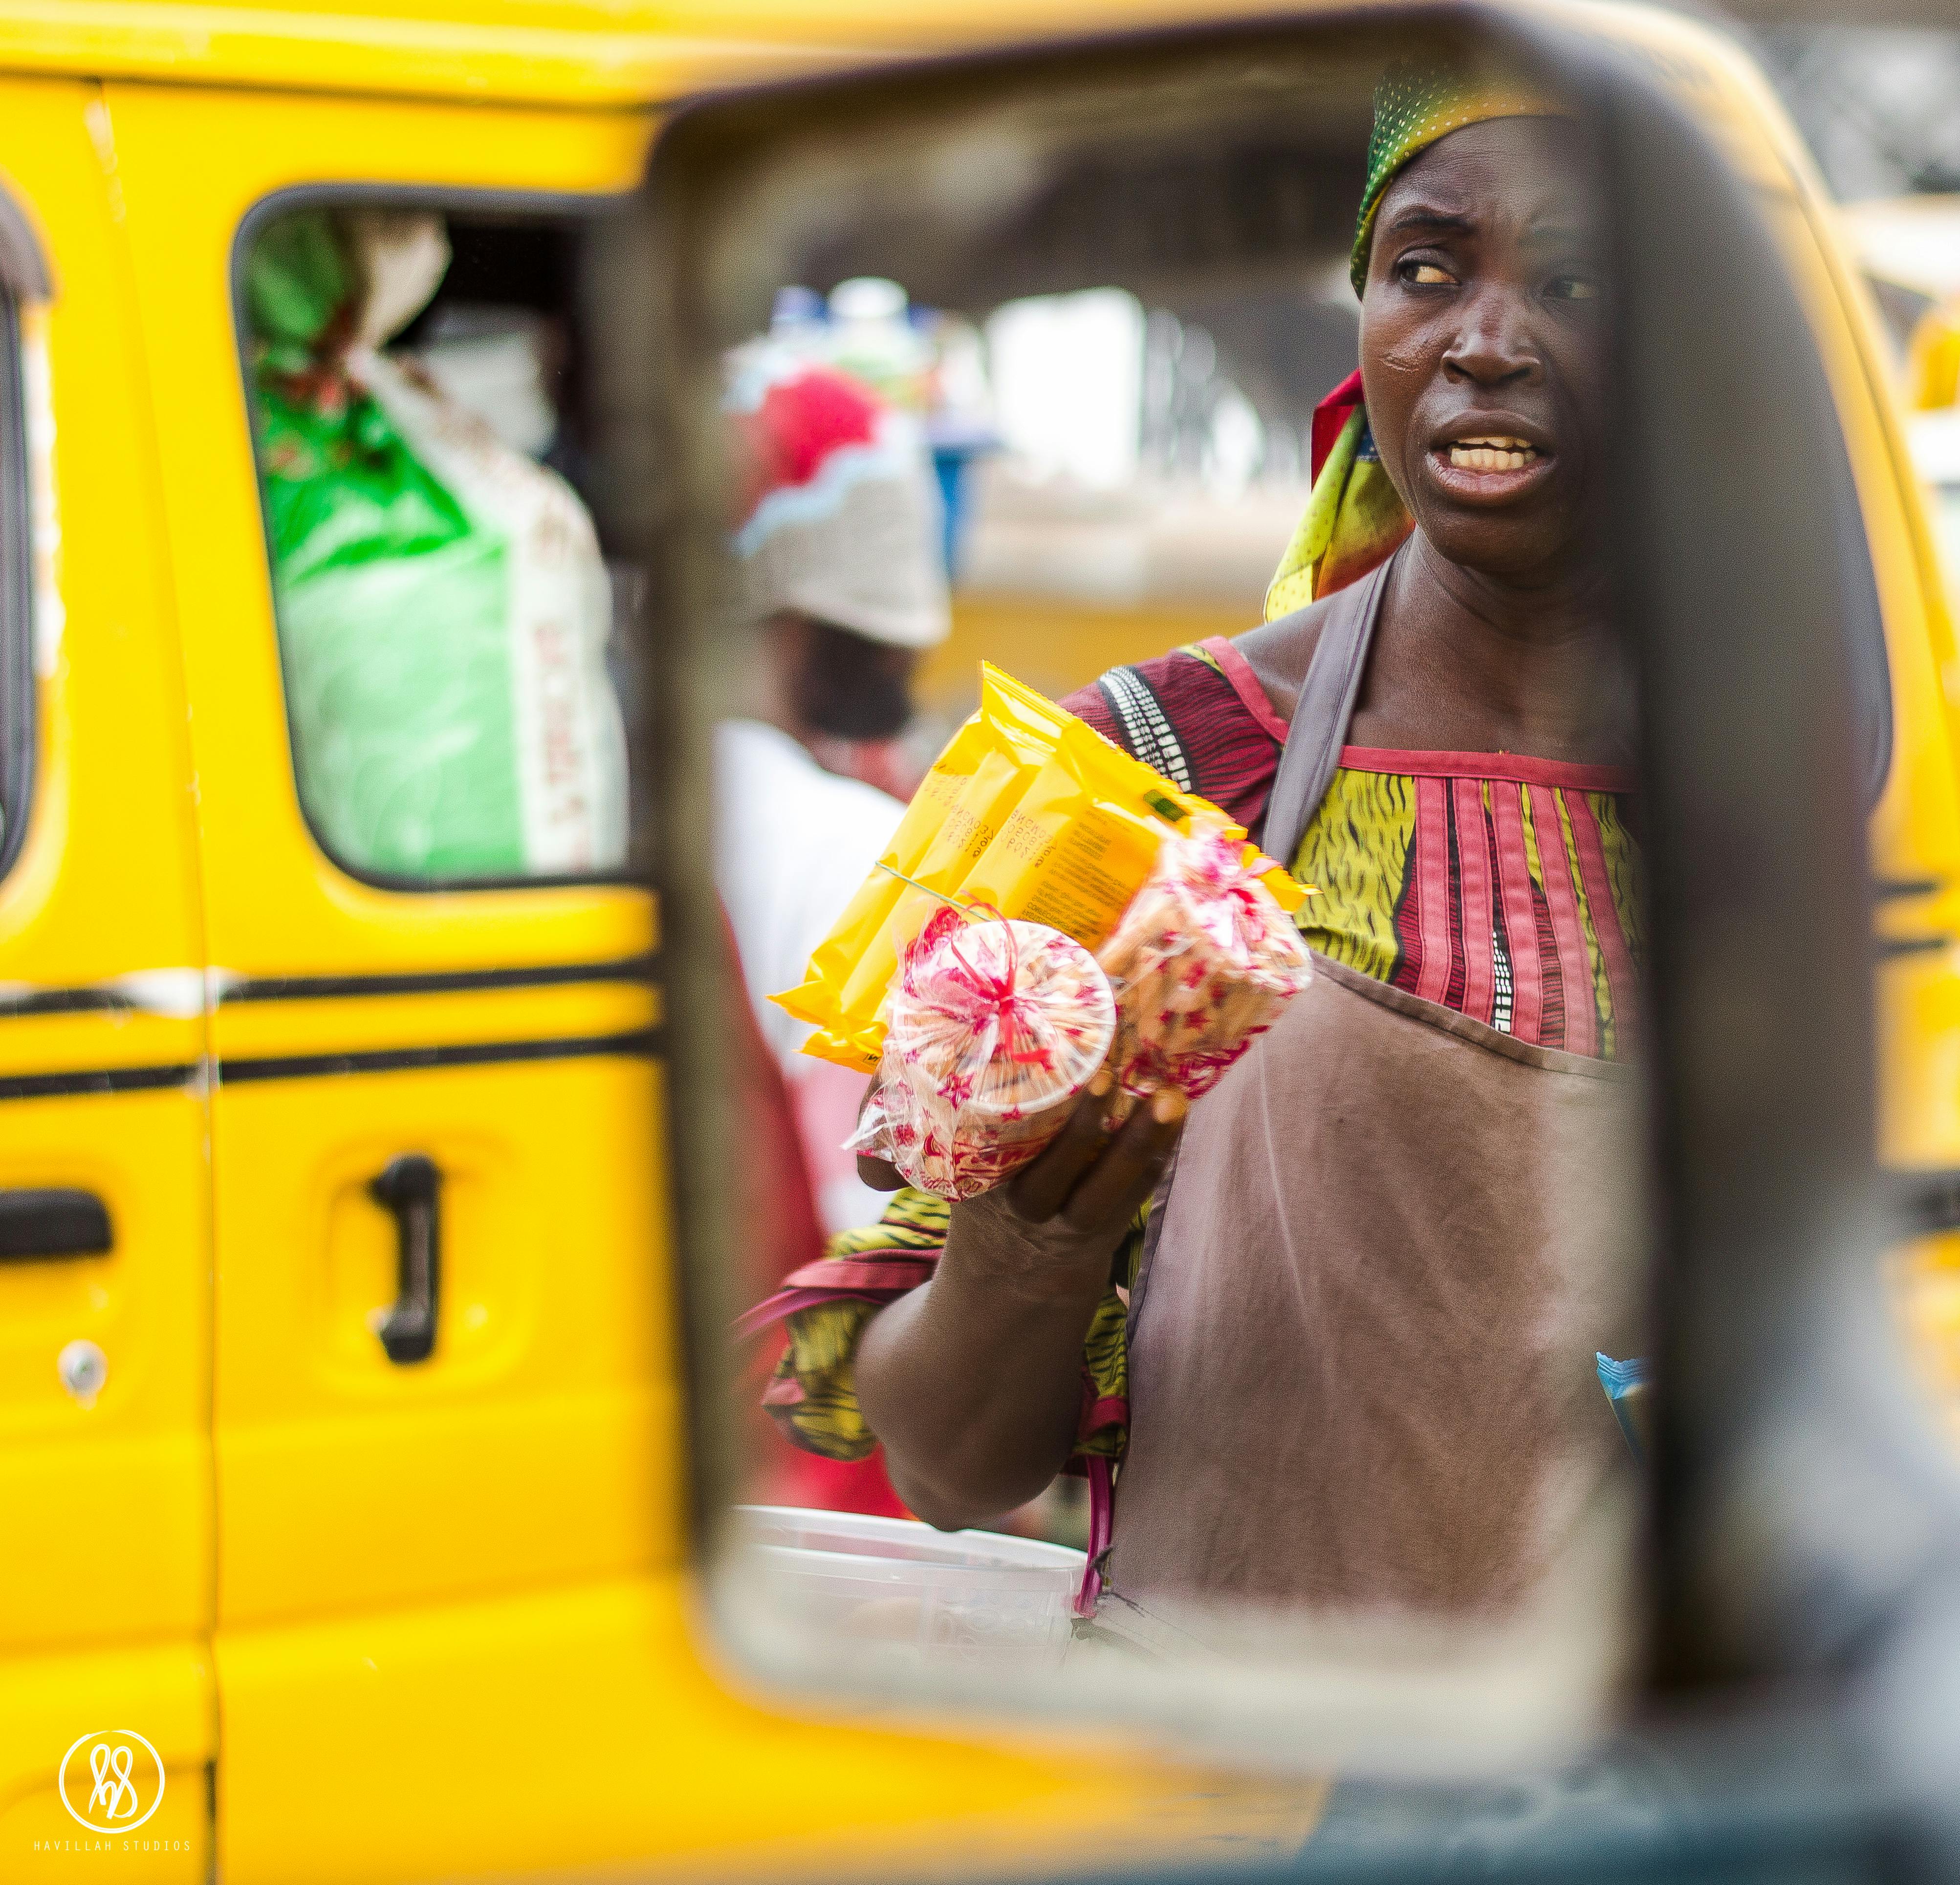 Free stock photo of Lagos Streets, street photography, yellow